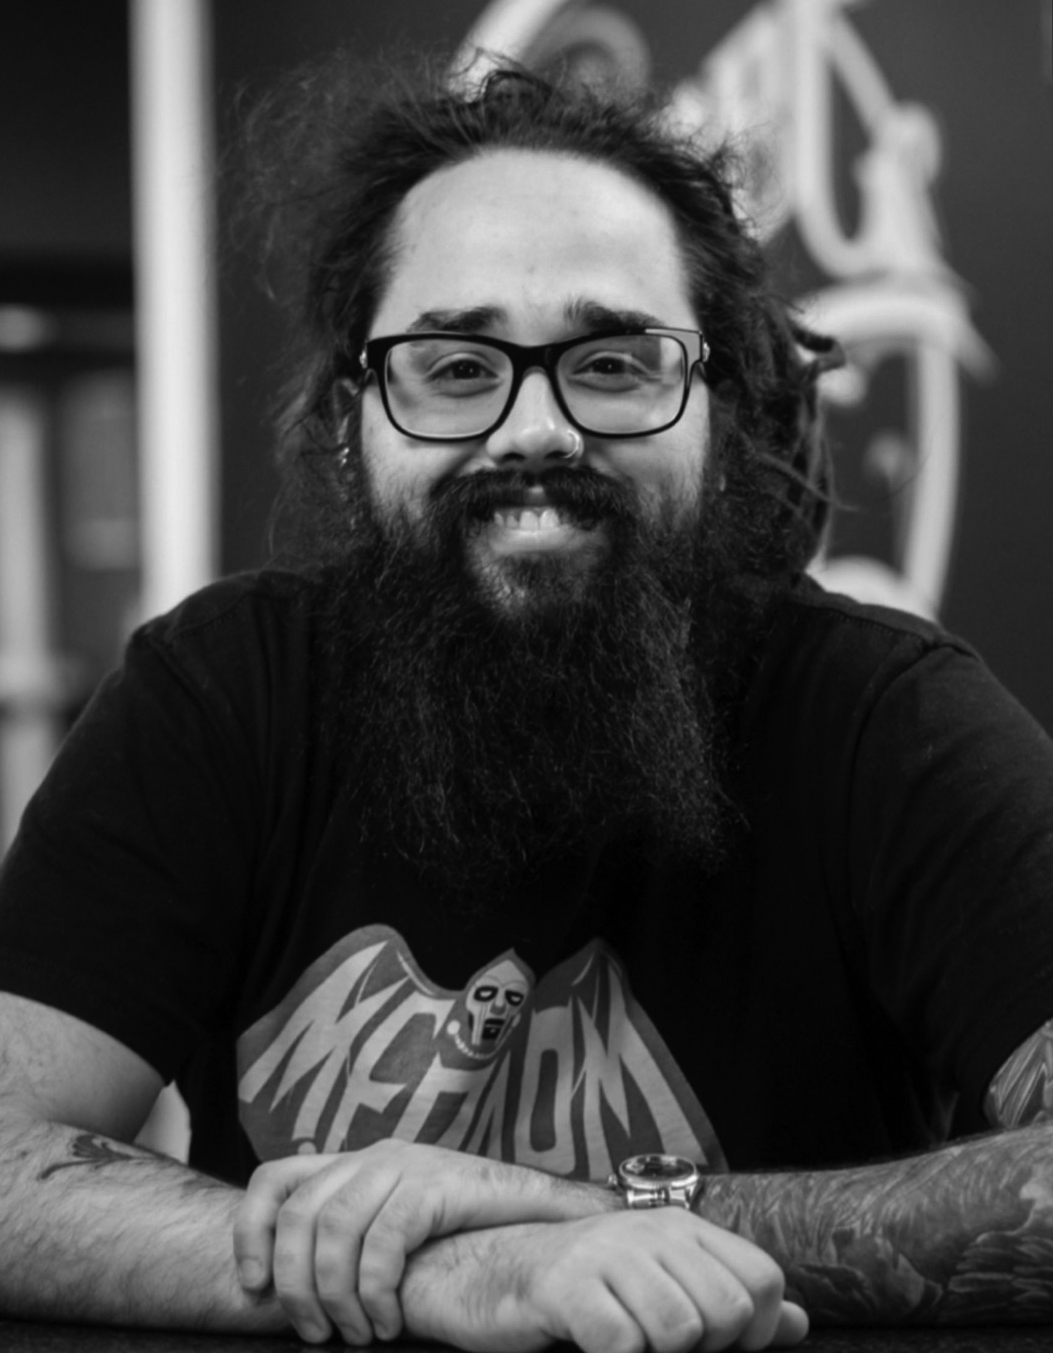 Tattoo artist with a beard